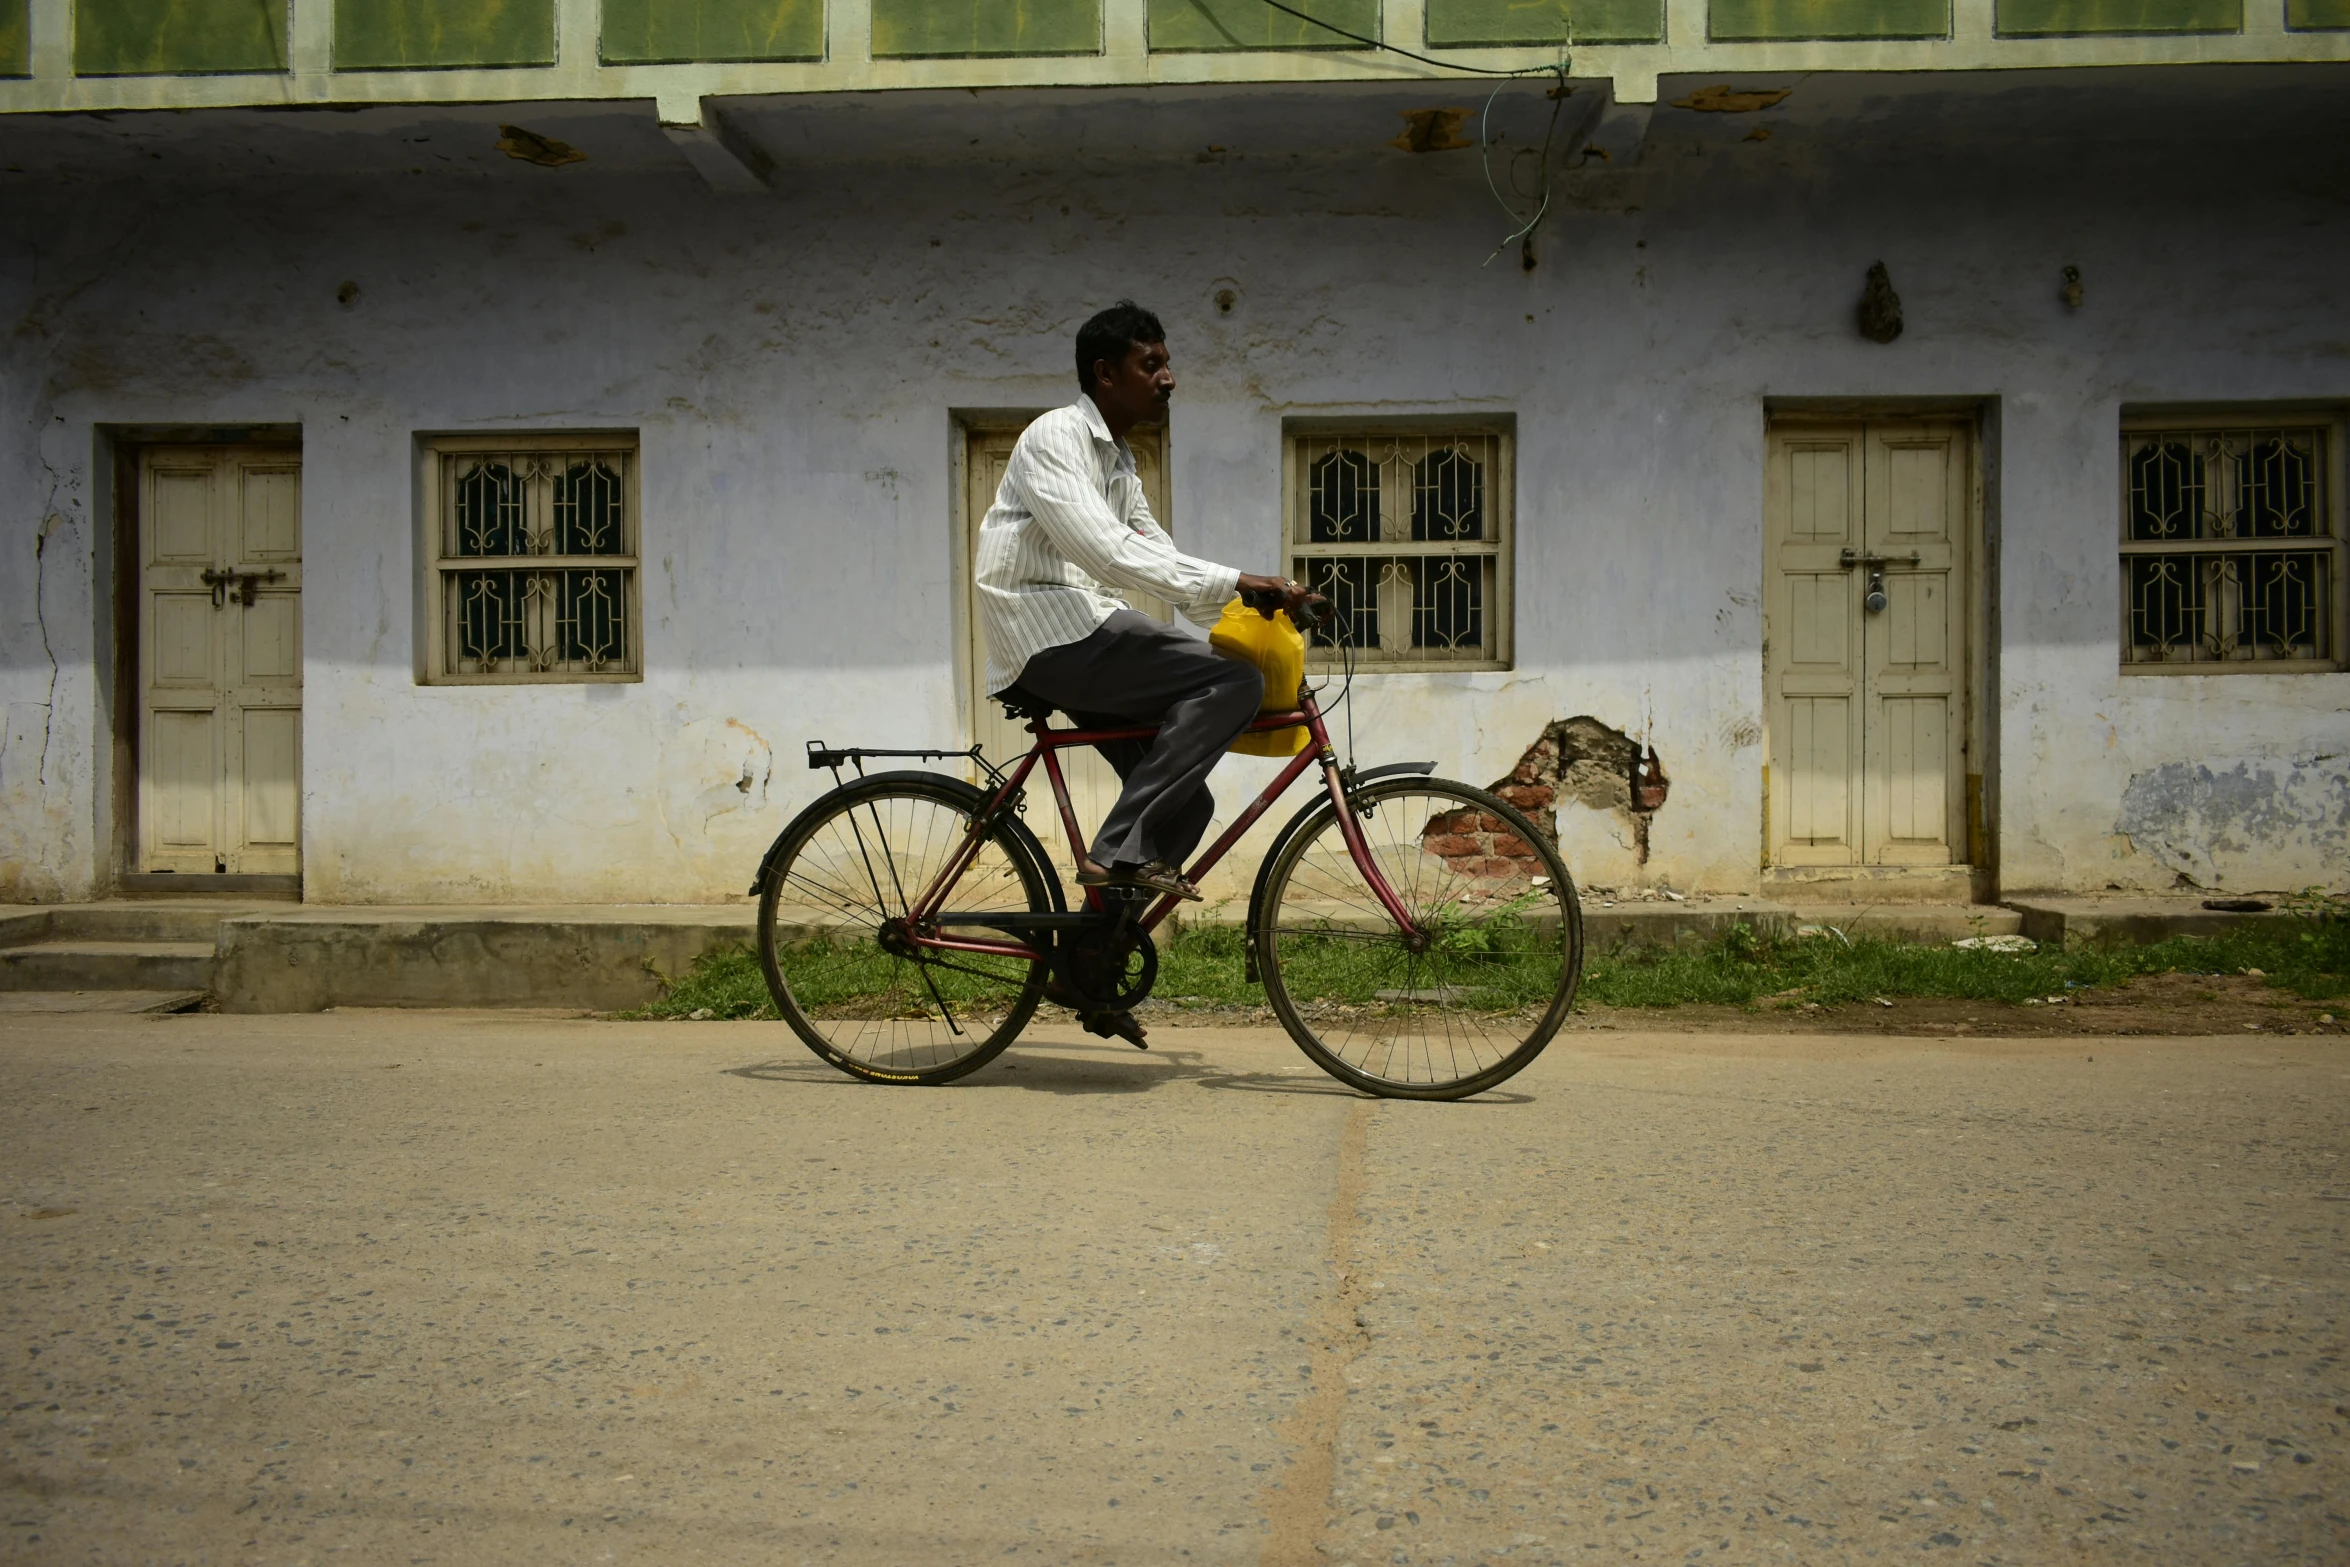 a man is riding a bike down the street